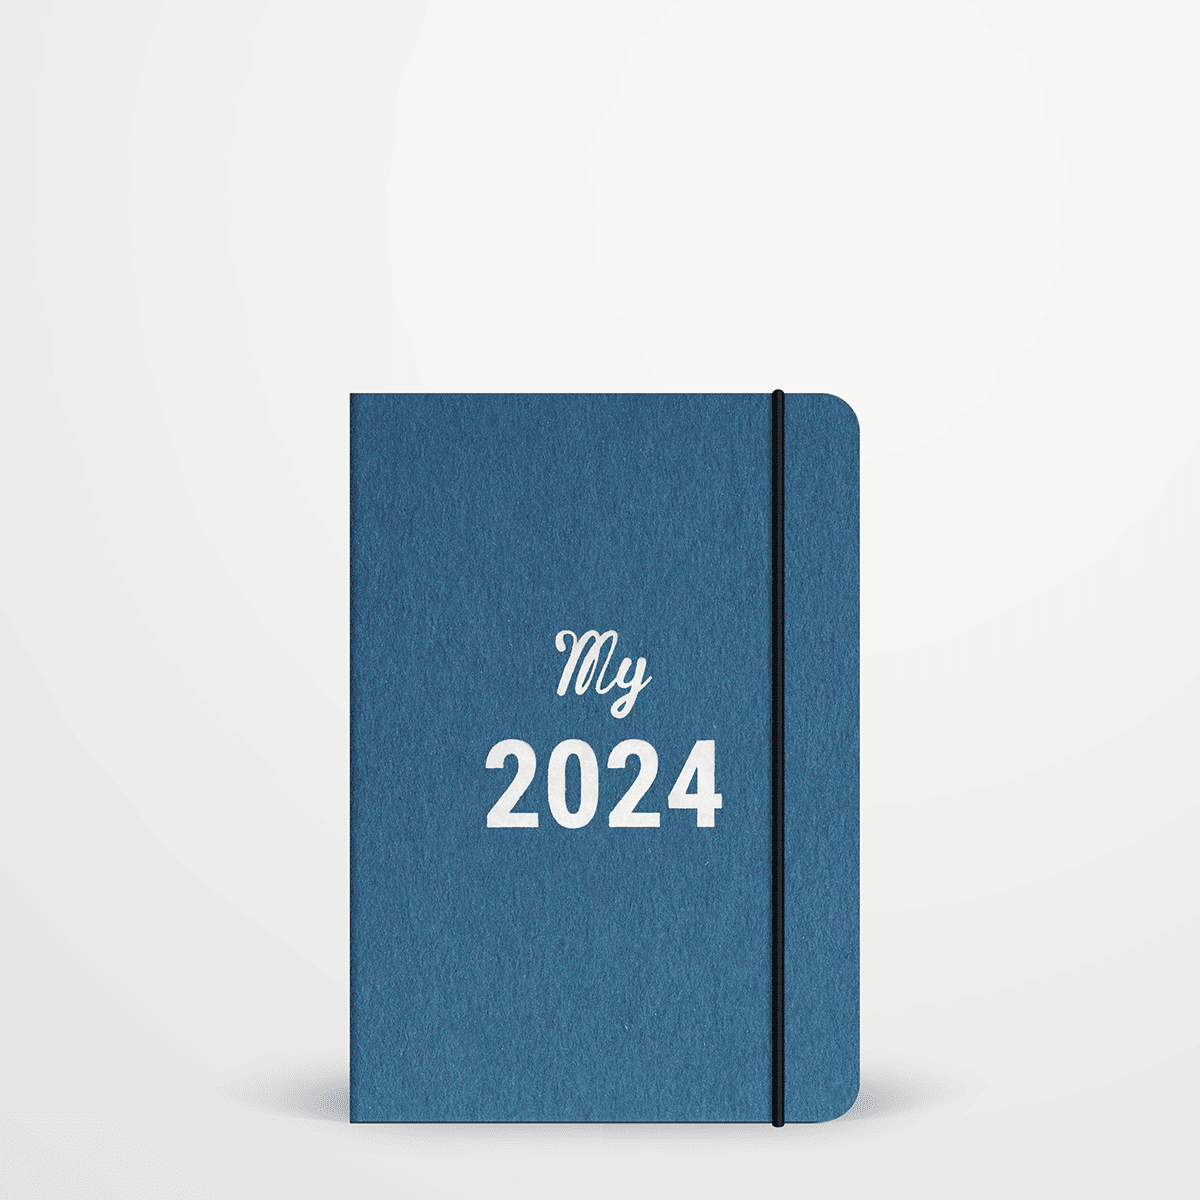 Petit agenda 2020 / 2021 - Vert - 17 mois - Agenda année civile